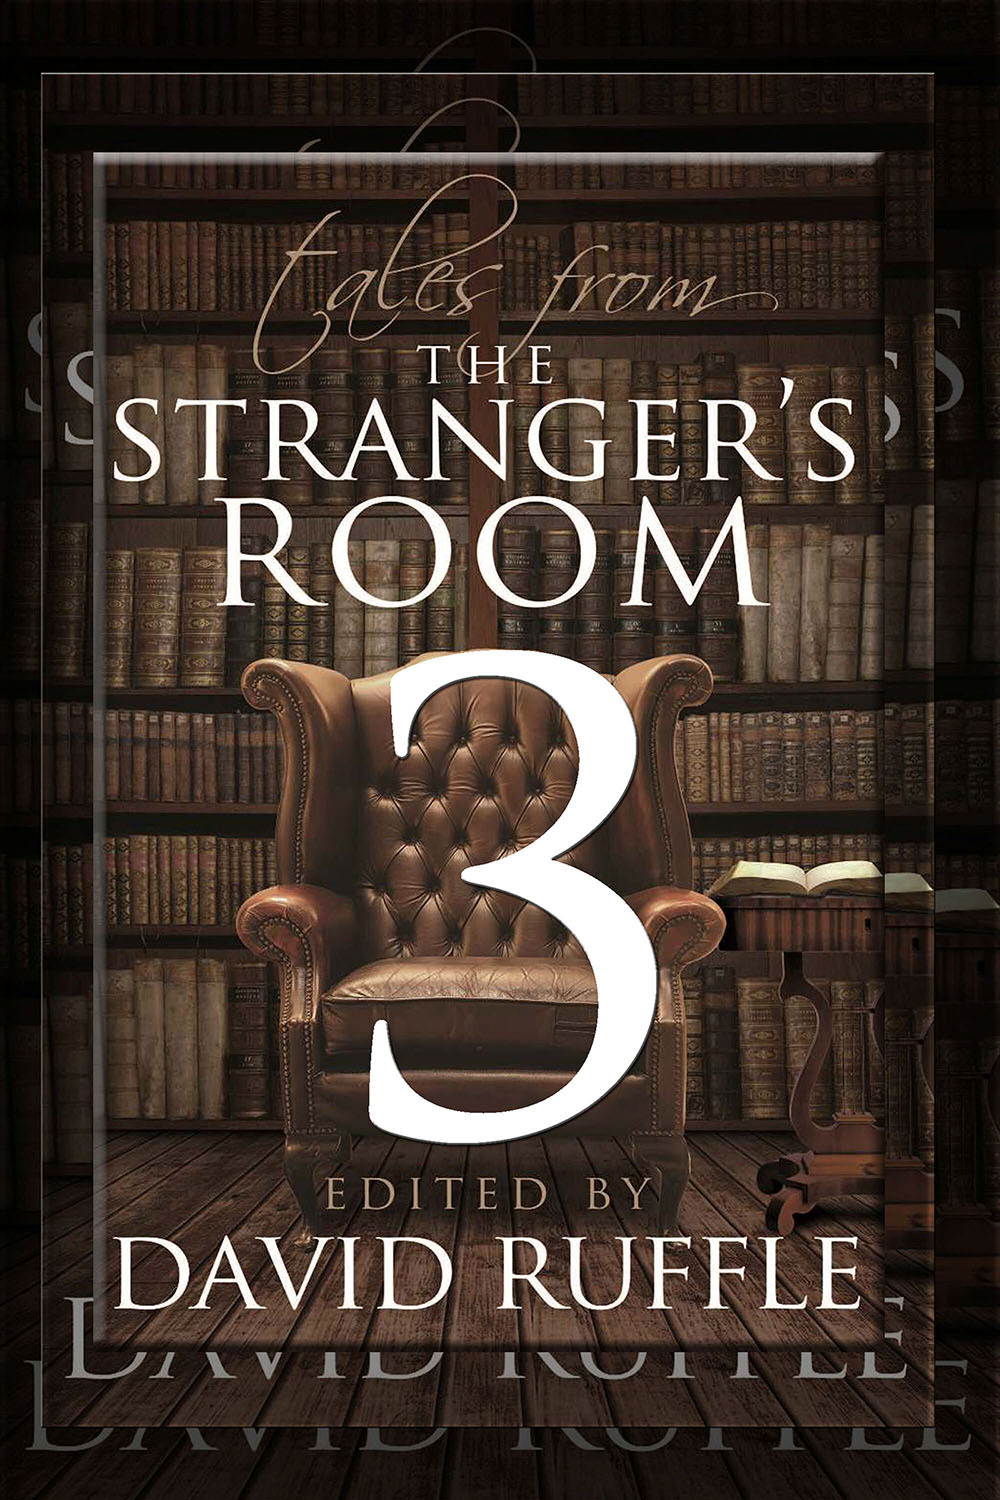 Ruffle, David - Sherlock Holmes: Tales from the Stranger's Room - Volume 3, e-kirja